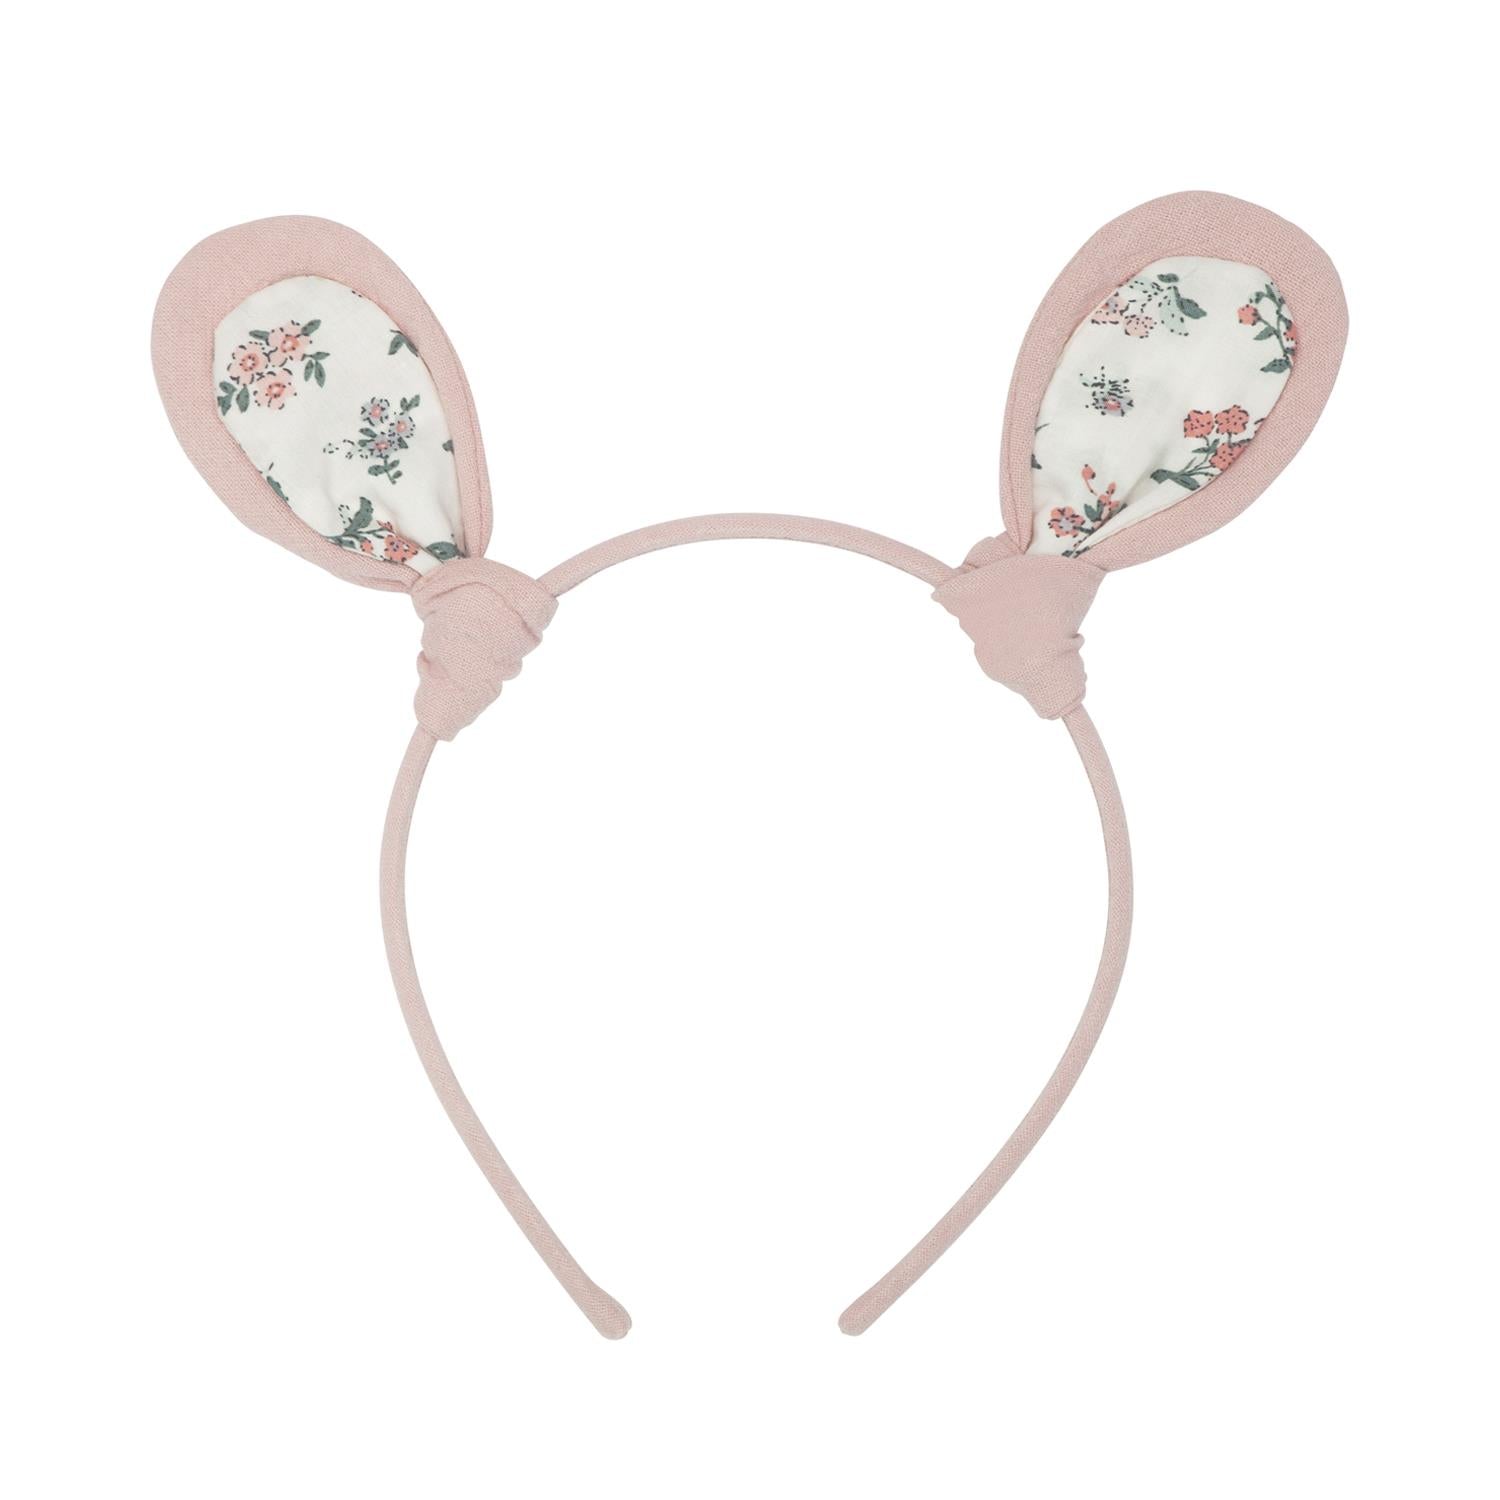 ROCKAHULA Kids Floral Bunny Ears Headband